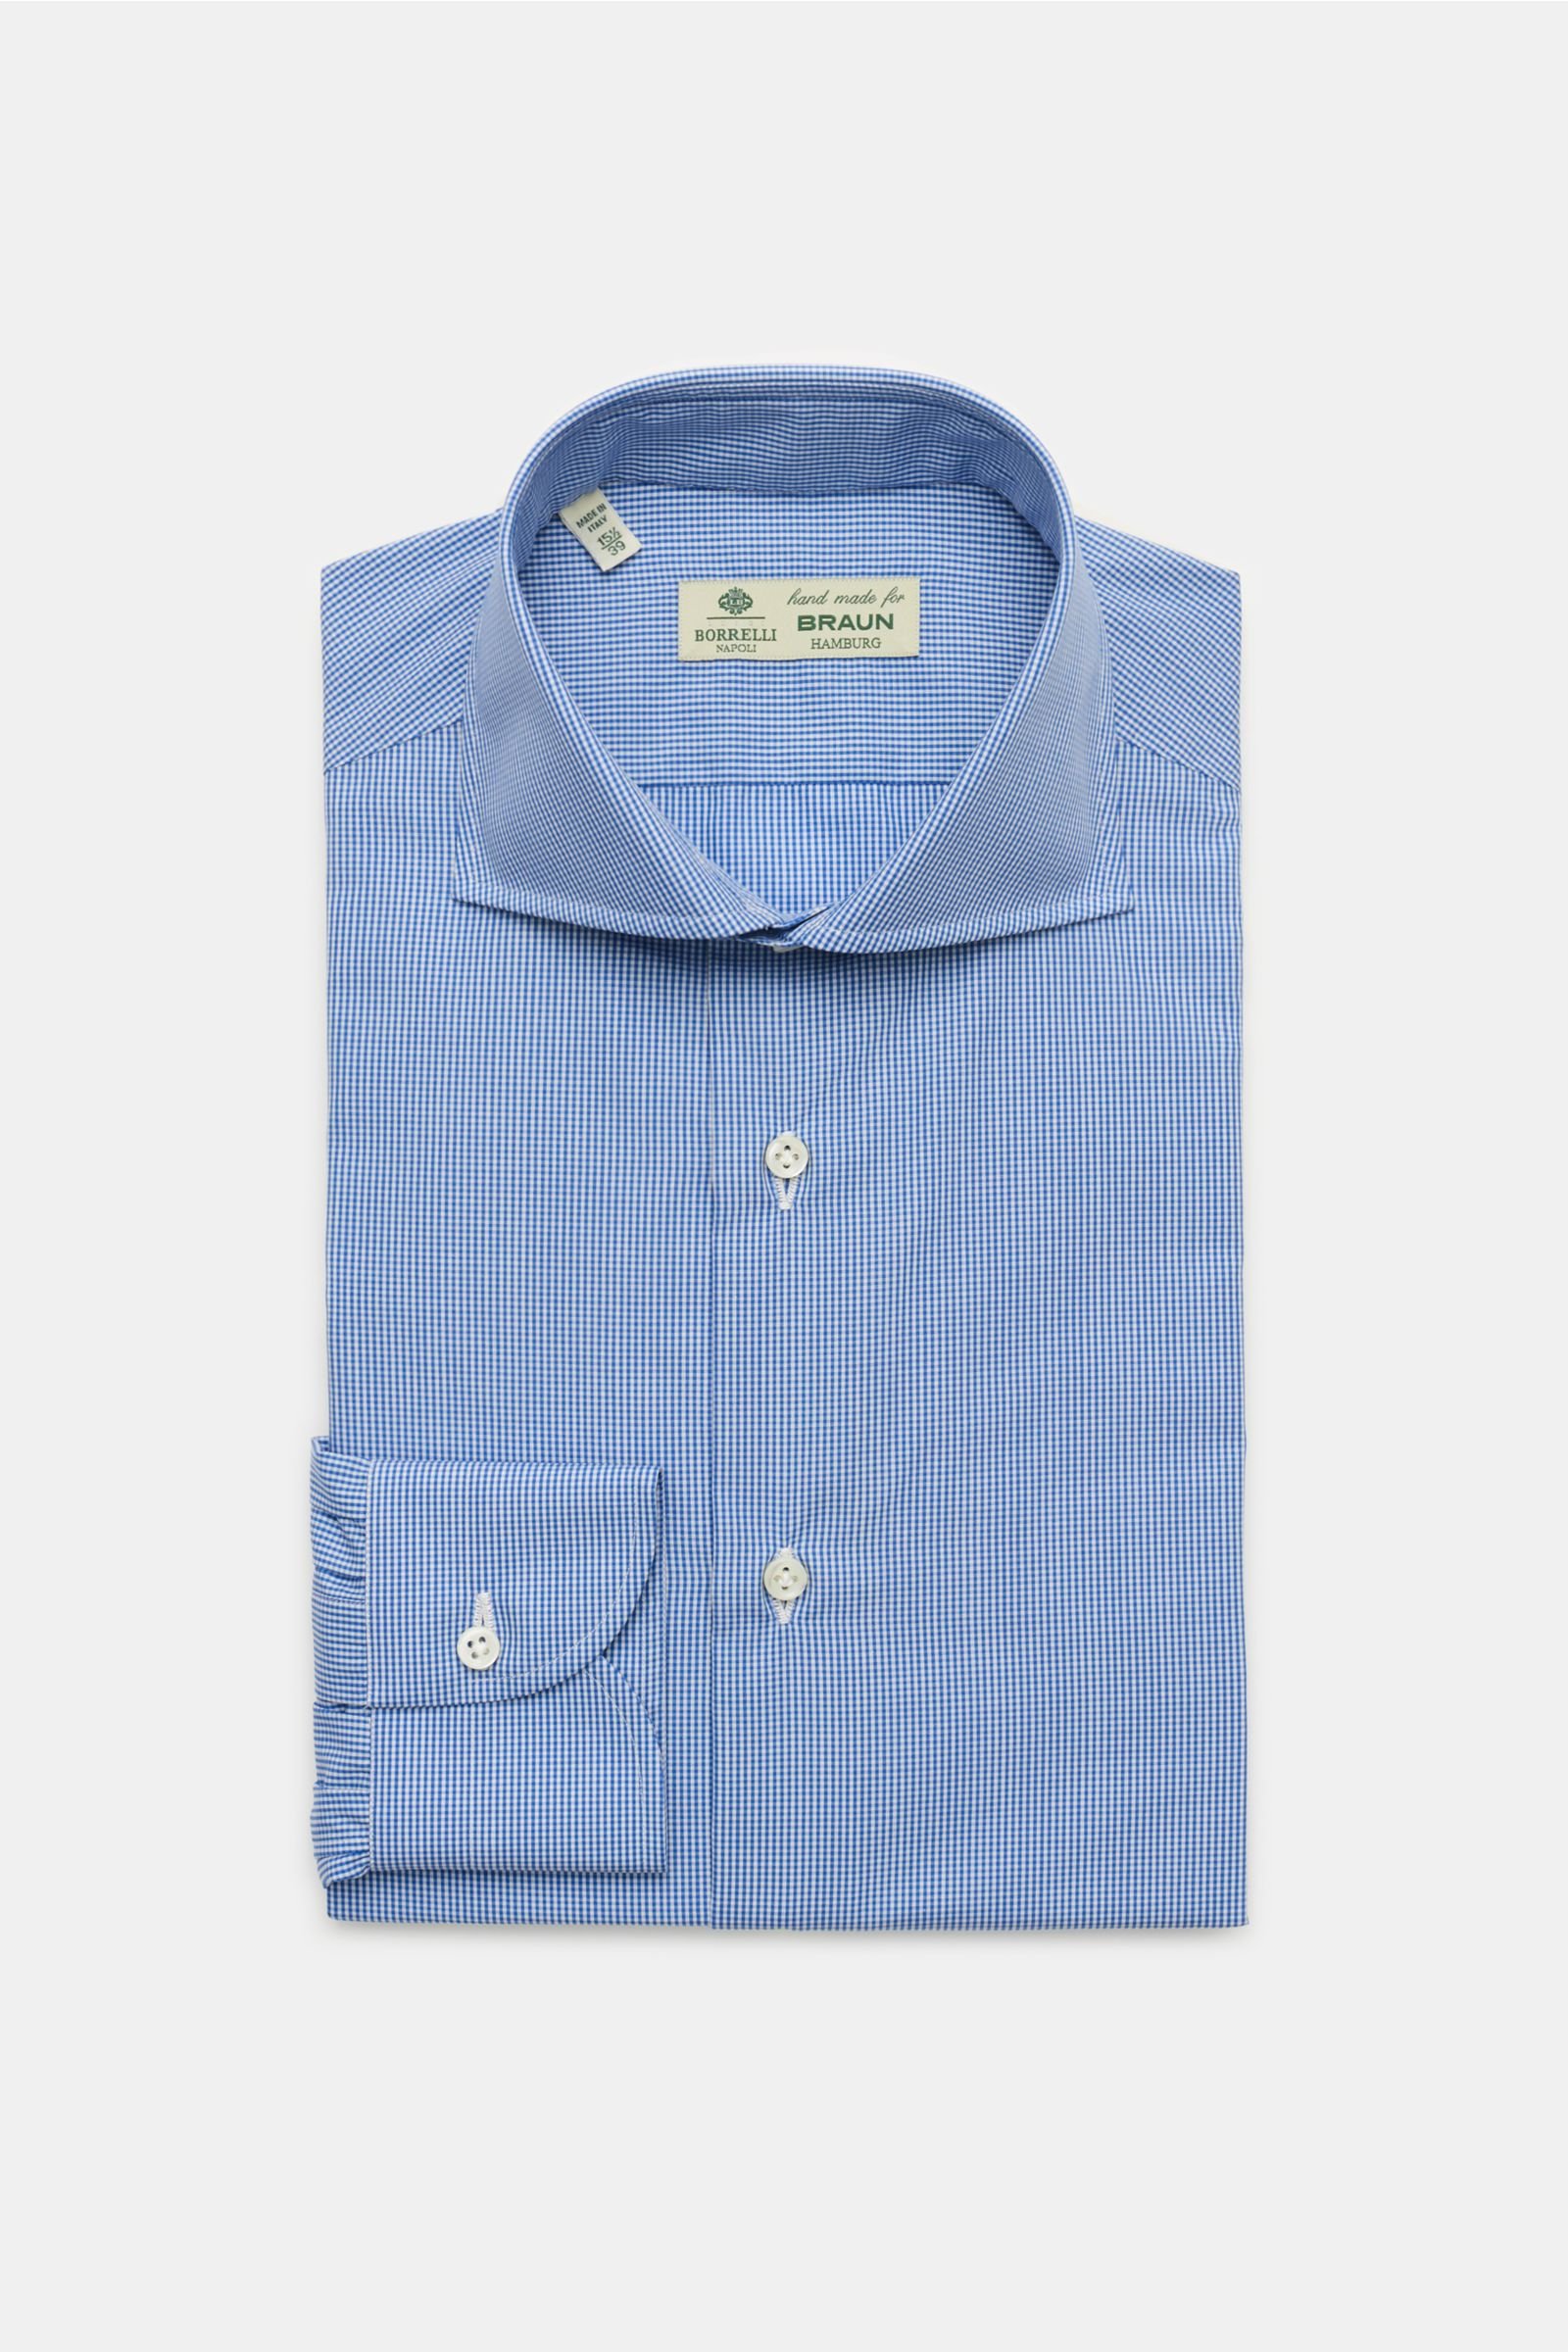 Business shirt 'Nando' shark collar dark blue/white checked